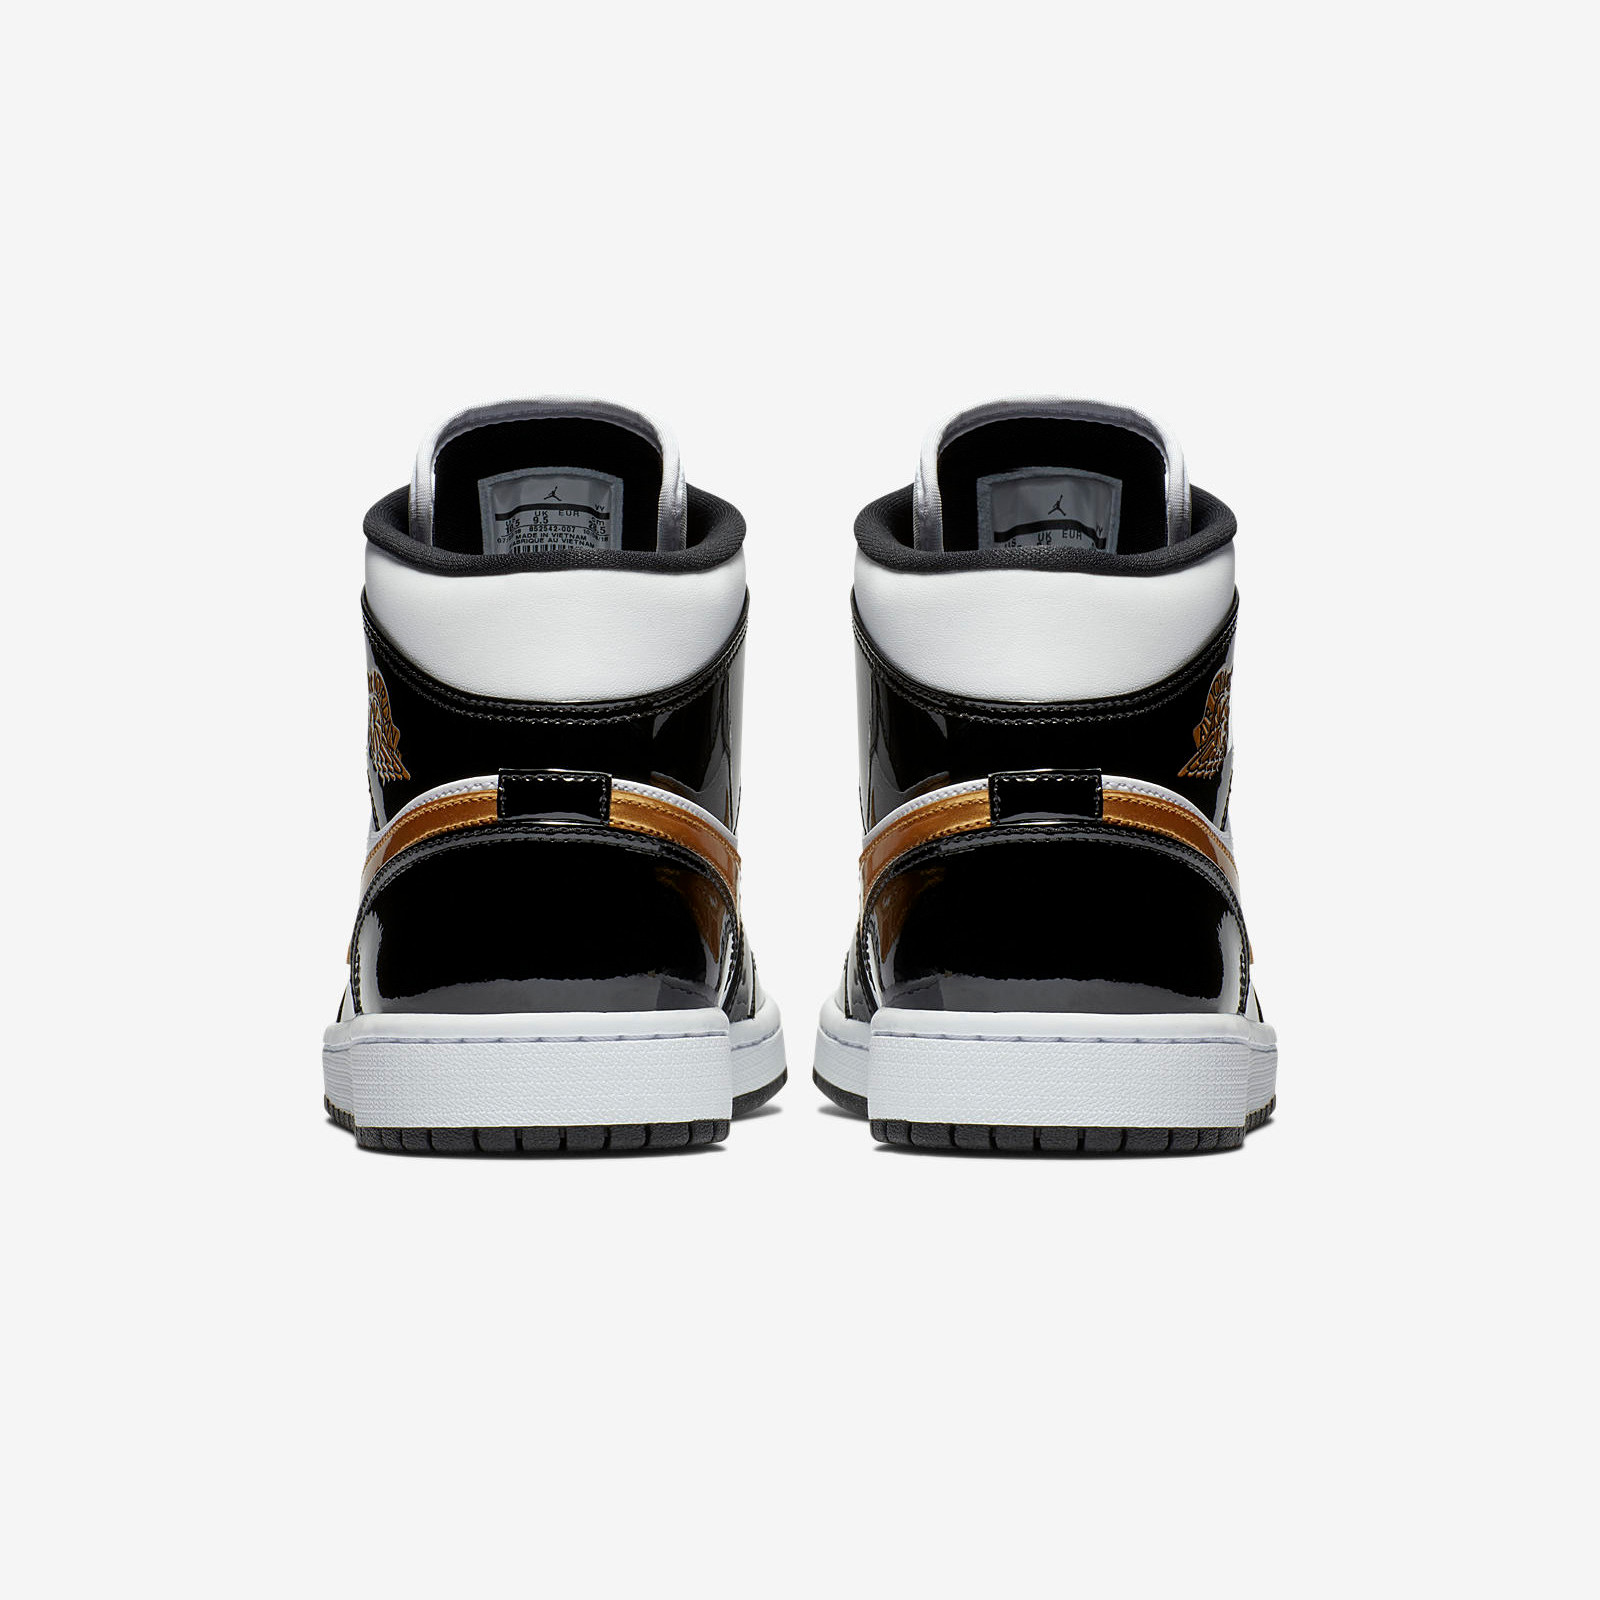 Air Jordan 1 Mid Patent
Black / White / Gold